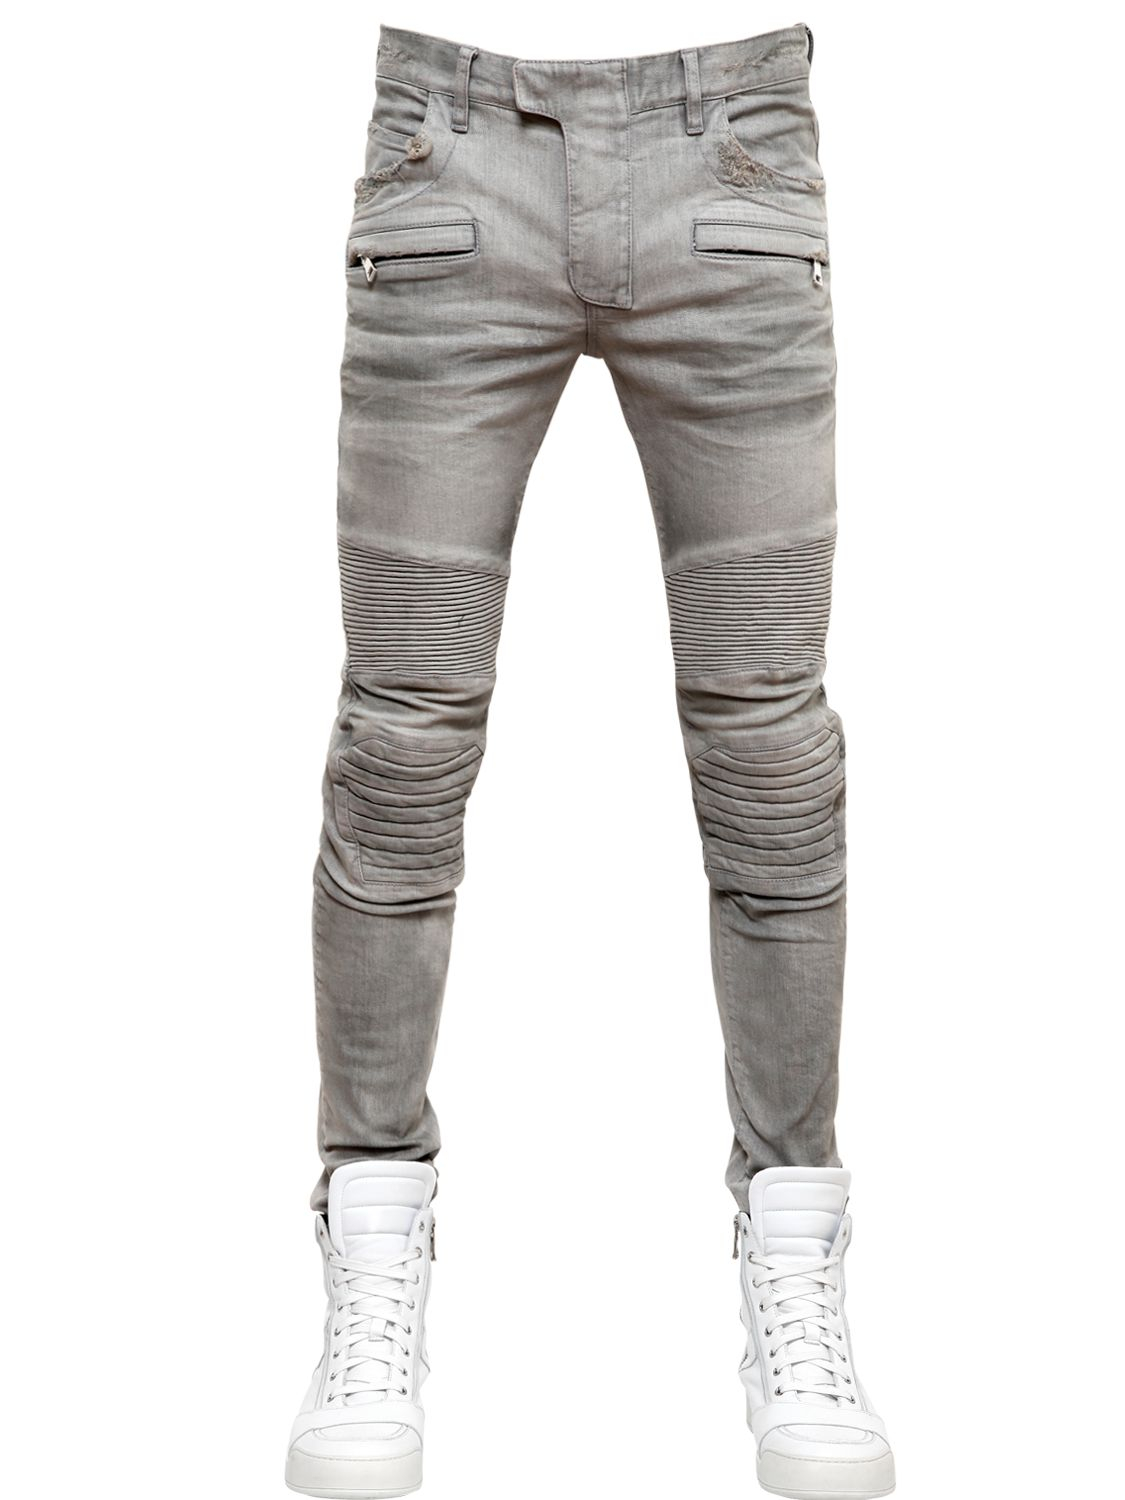 Balmain 16Cm Stretch Cotton Denim Jeans in Grey (Gray) for Men - Lyst